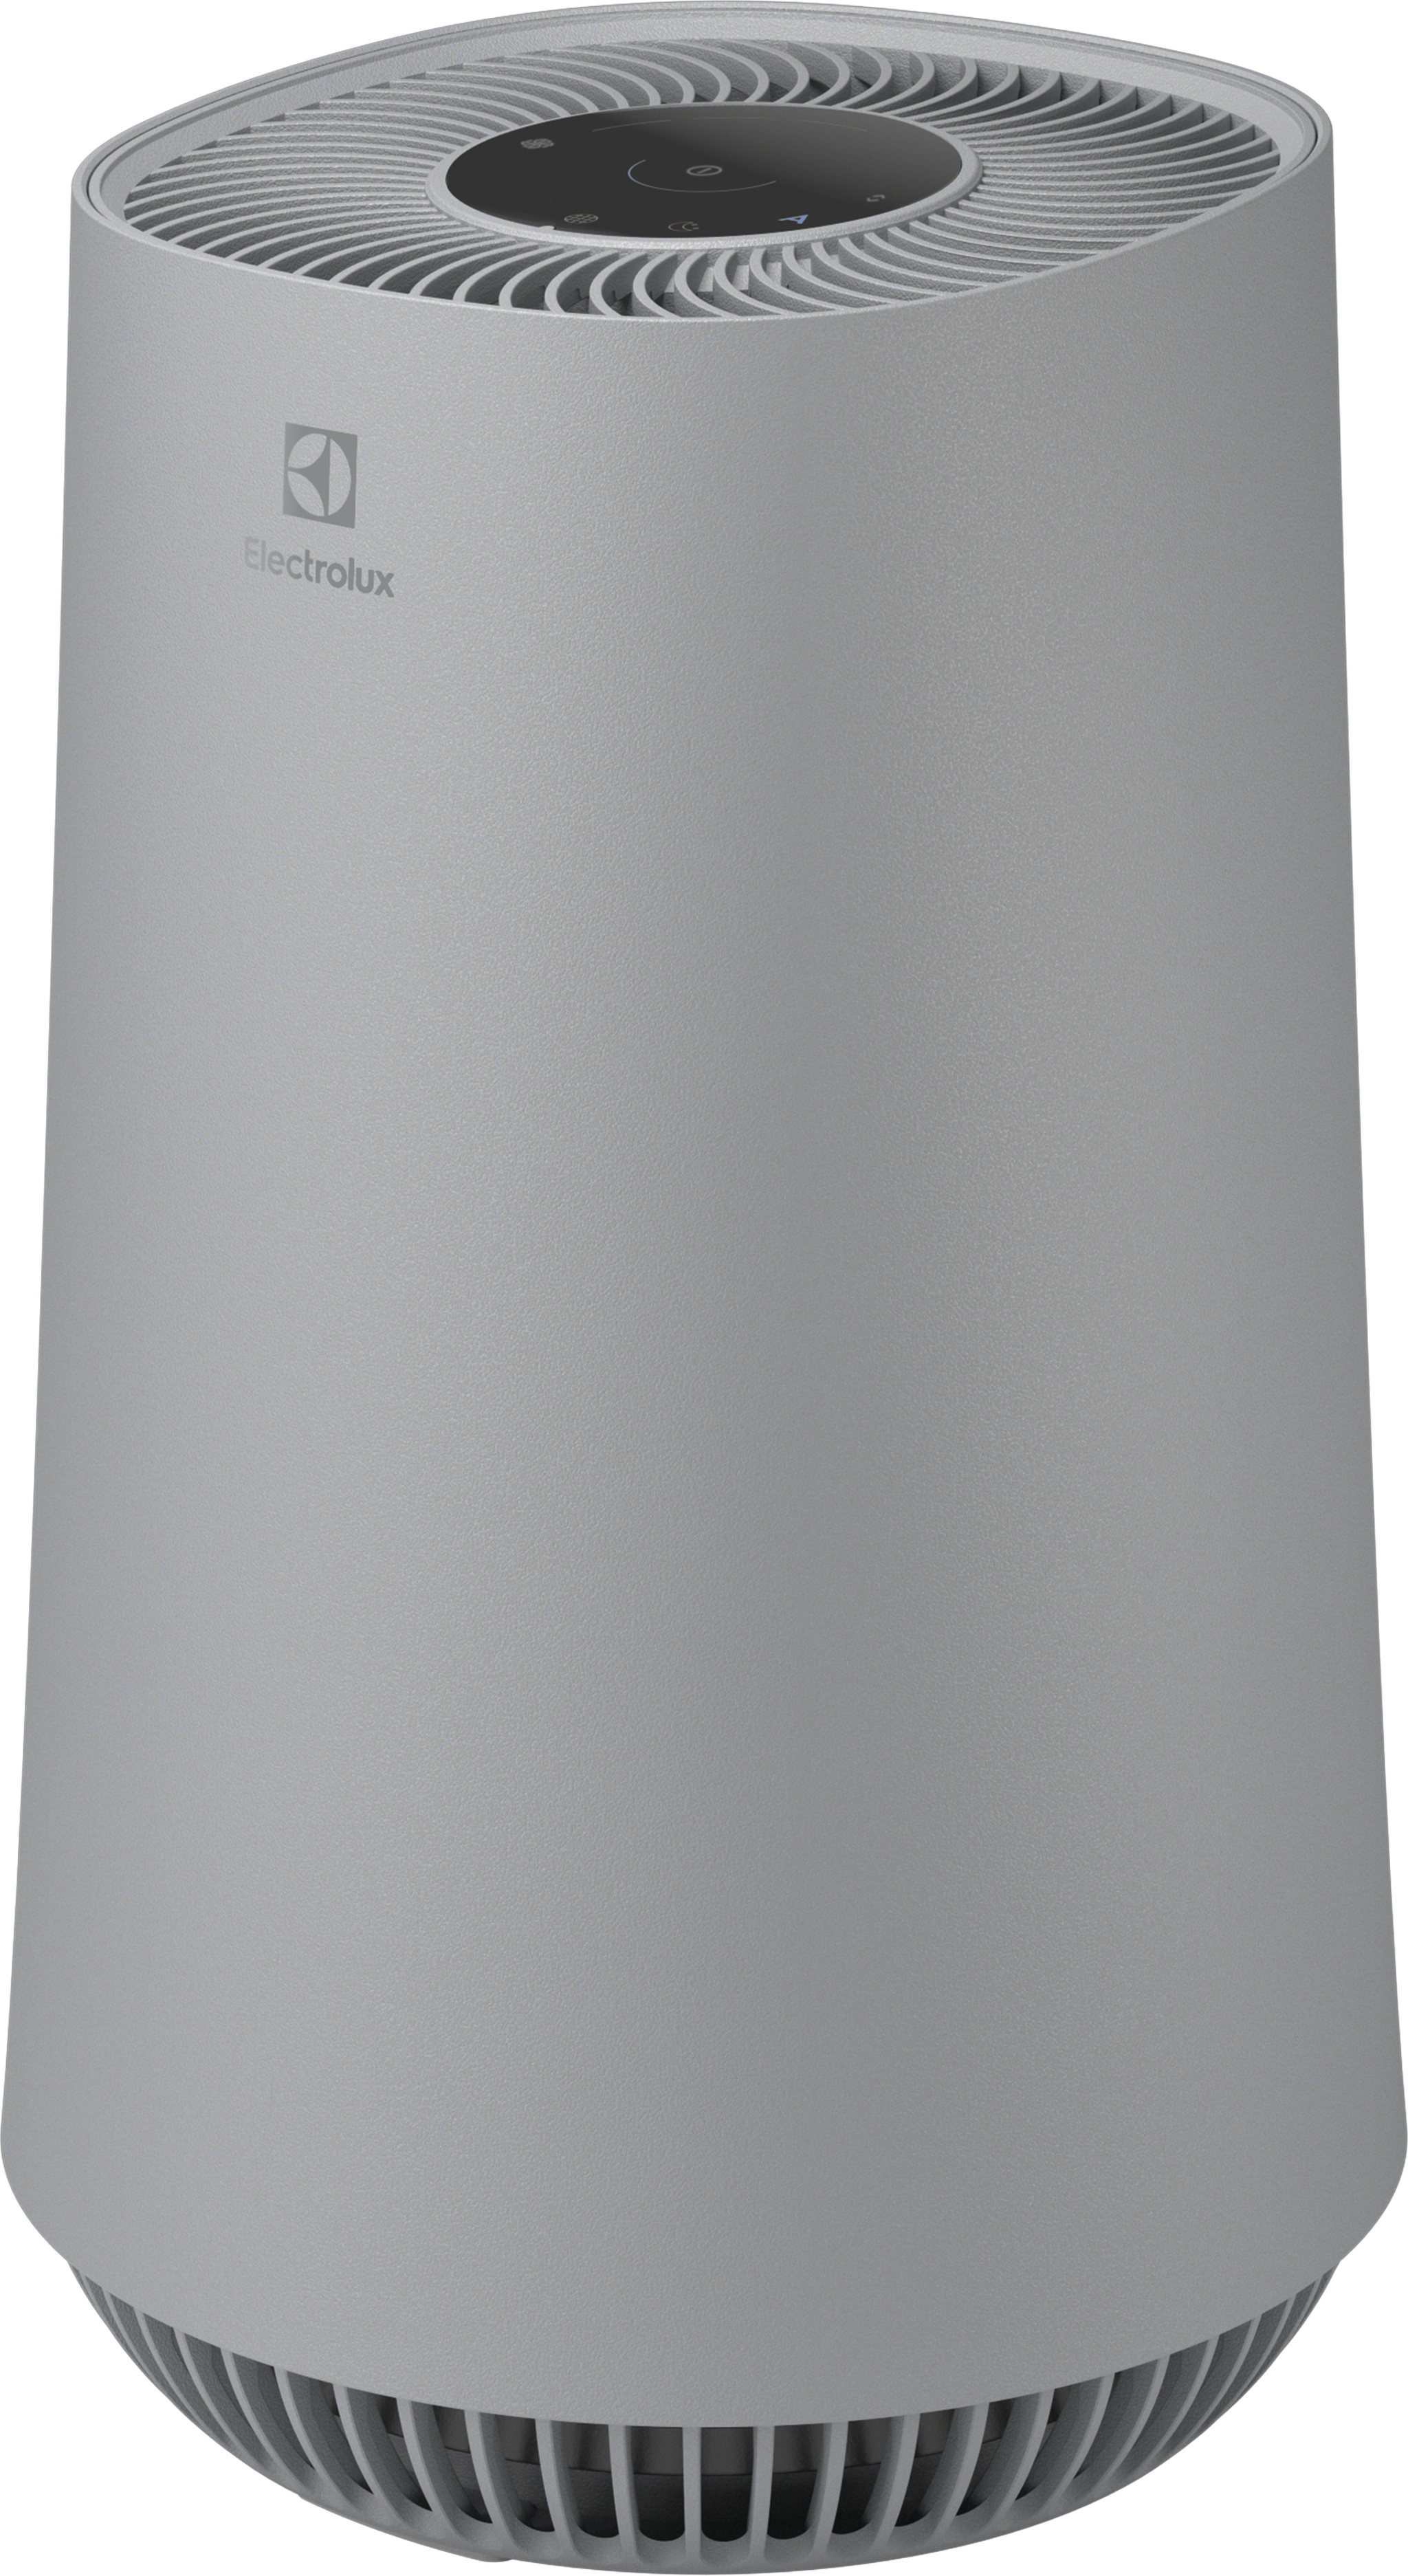 Electrolux Air Purifier, FA41-402GY - Grey